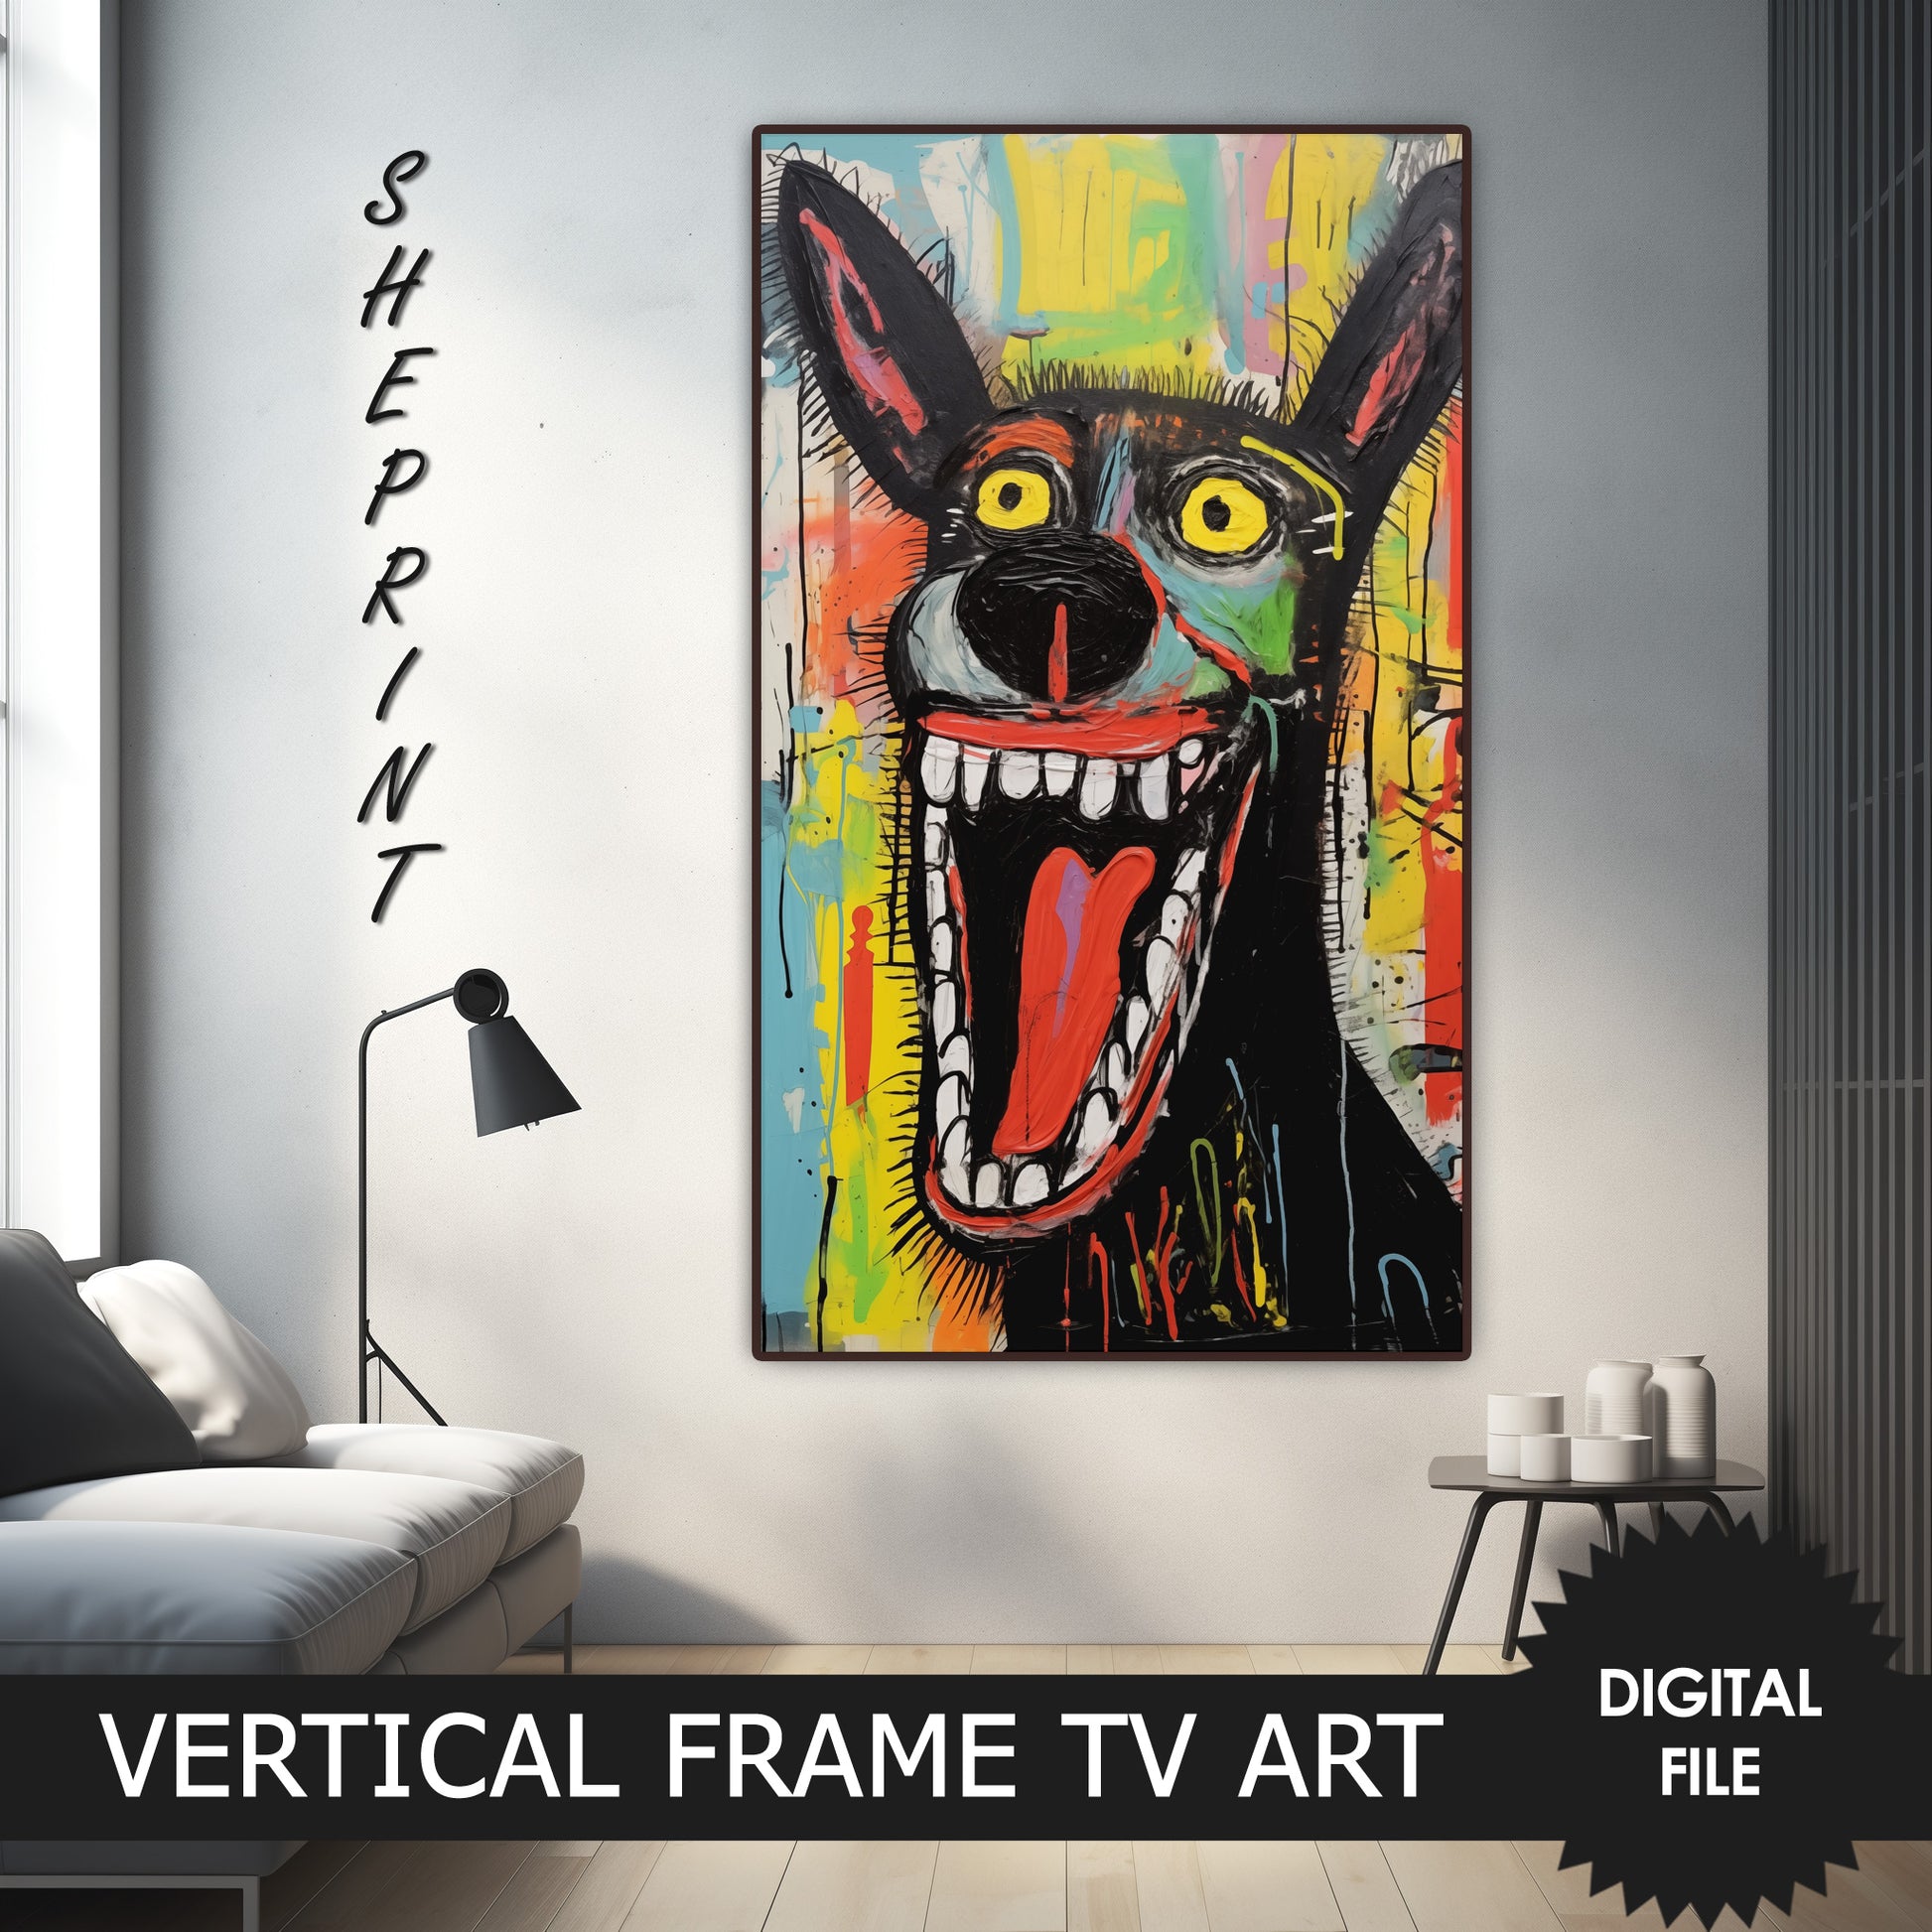 Vertical Frame TV Art, Barking Dog, Raw Art Brut Oil Painting, preview on Samsung Frame TV when mounted vertically